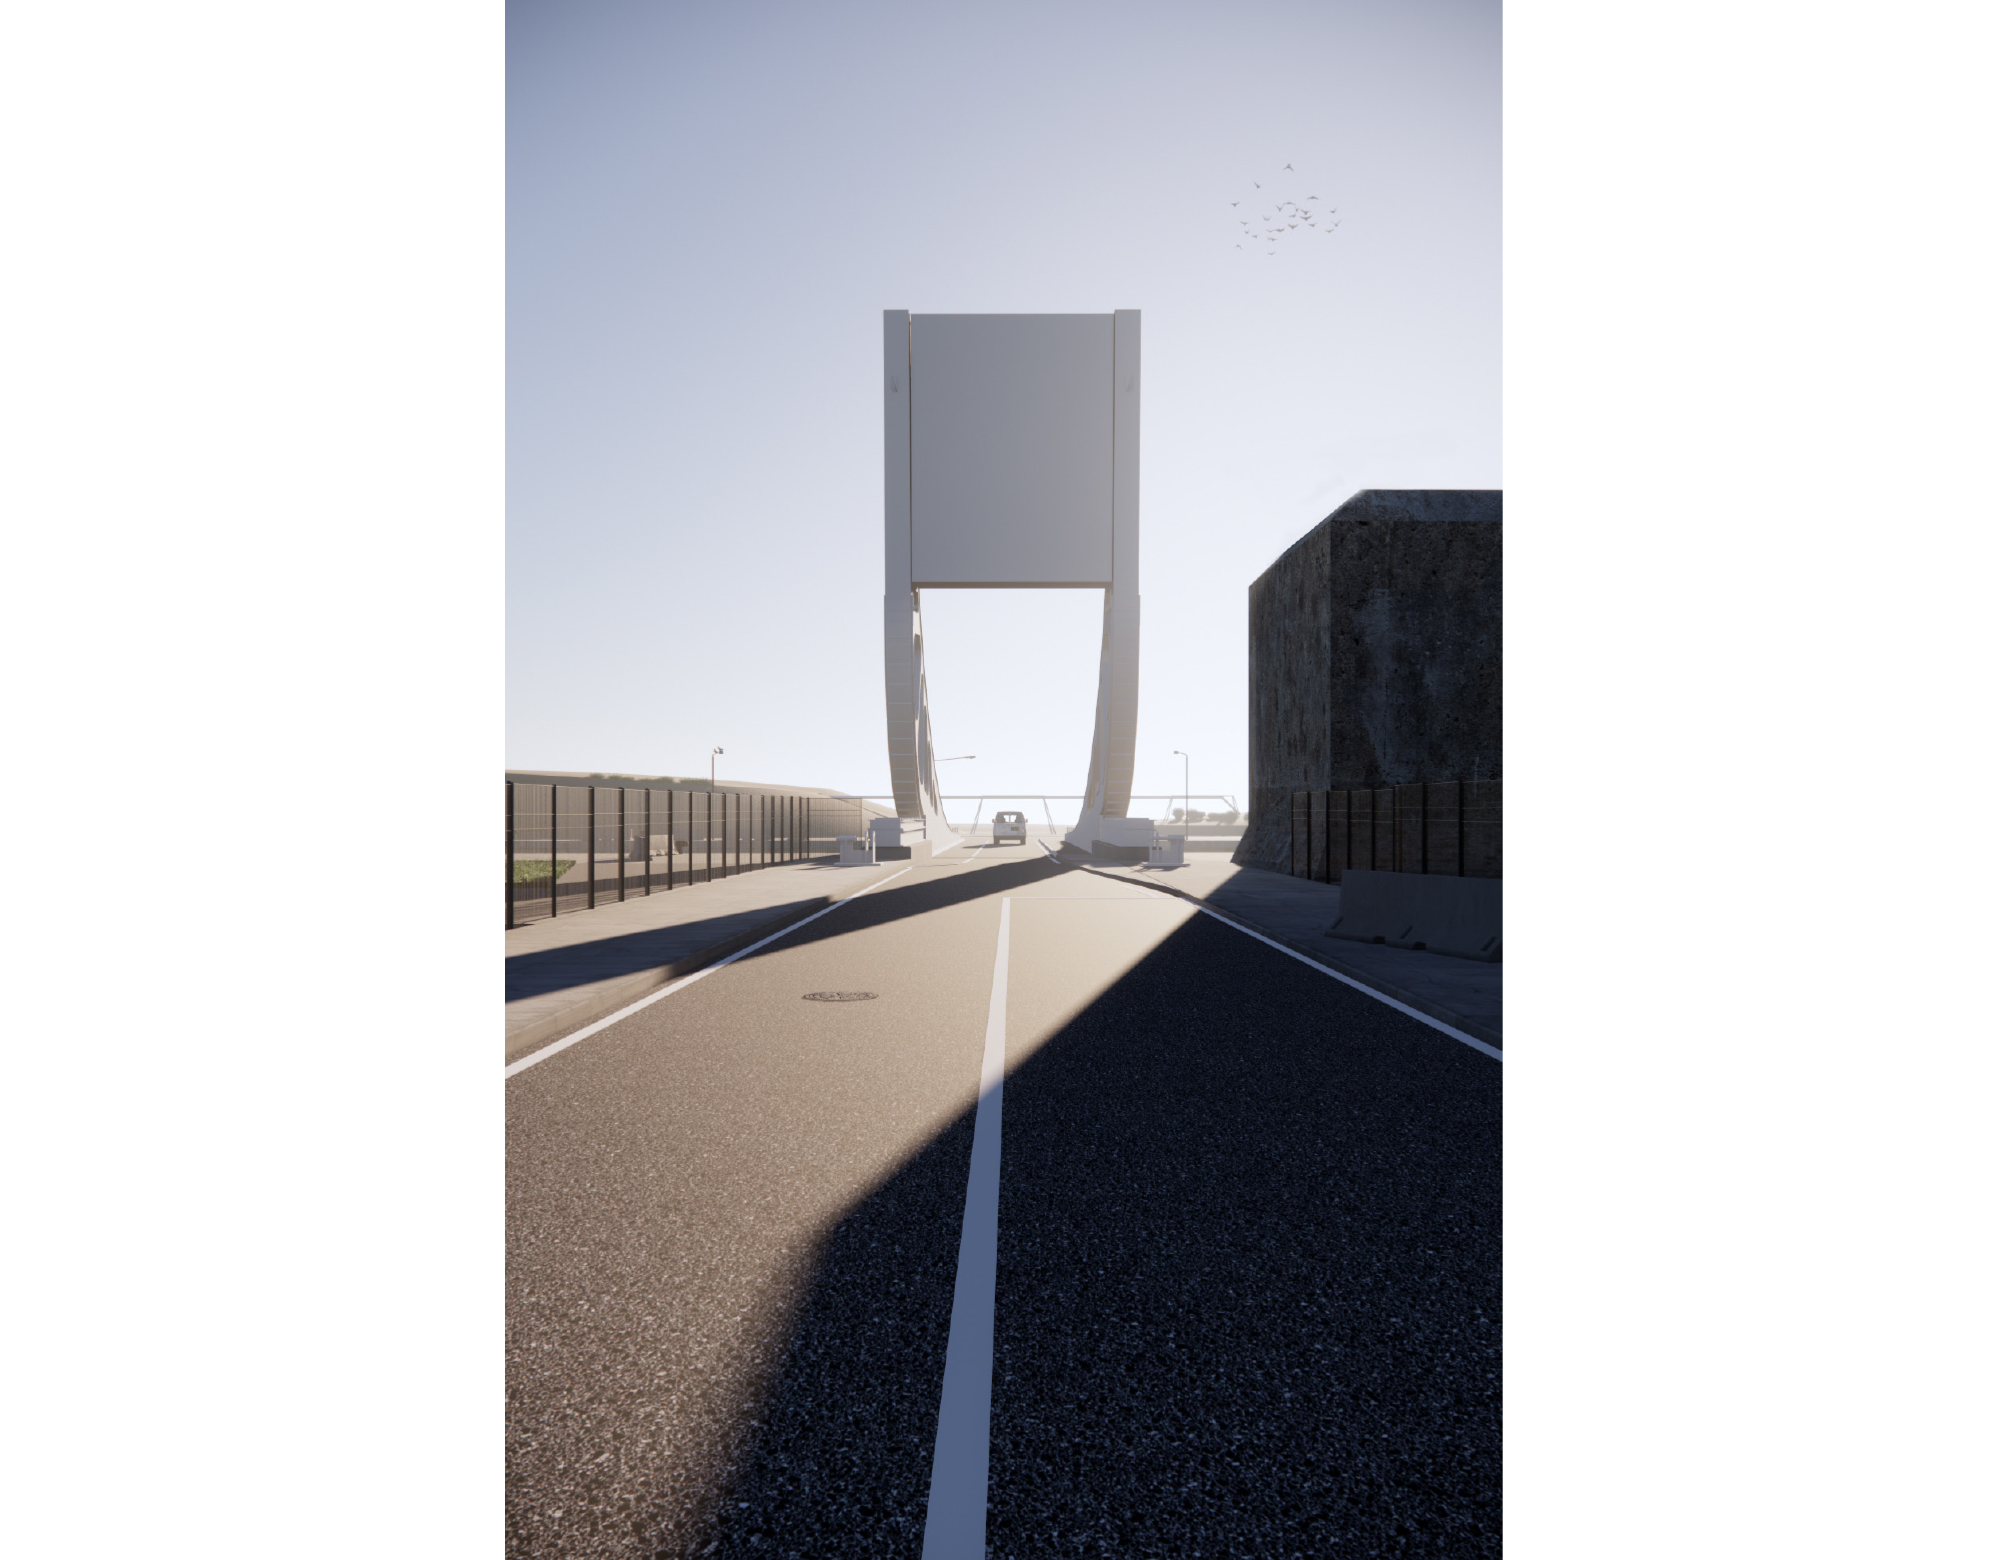 05-visuel-pont-levant-watier-dunkerque-nu-architecture-ingenierie2